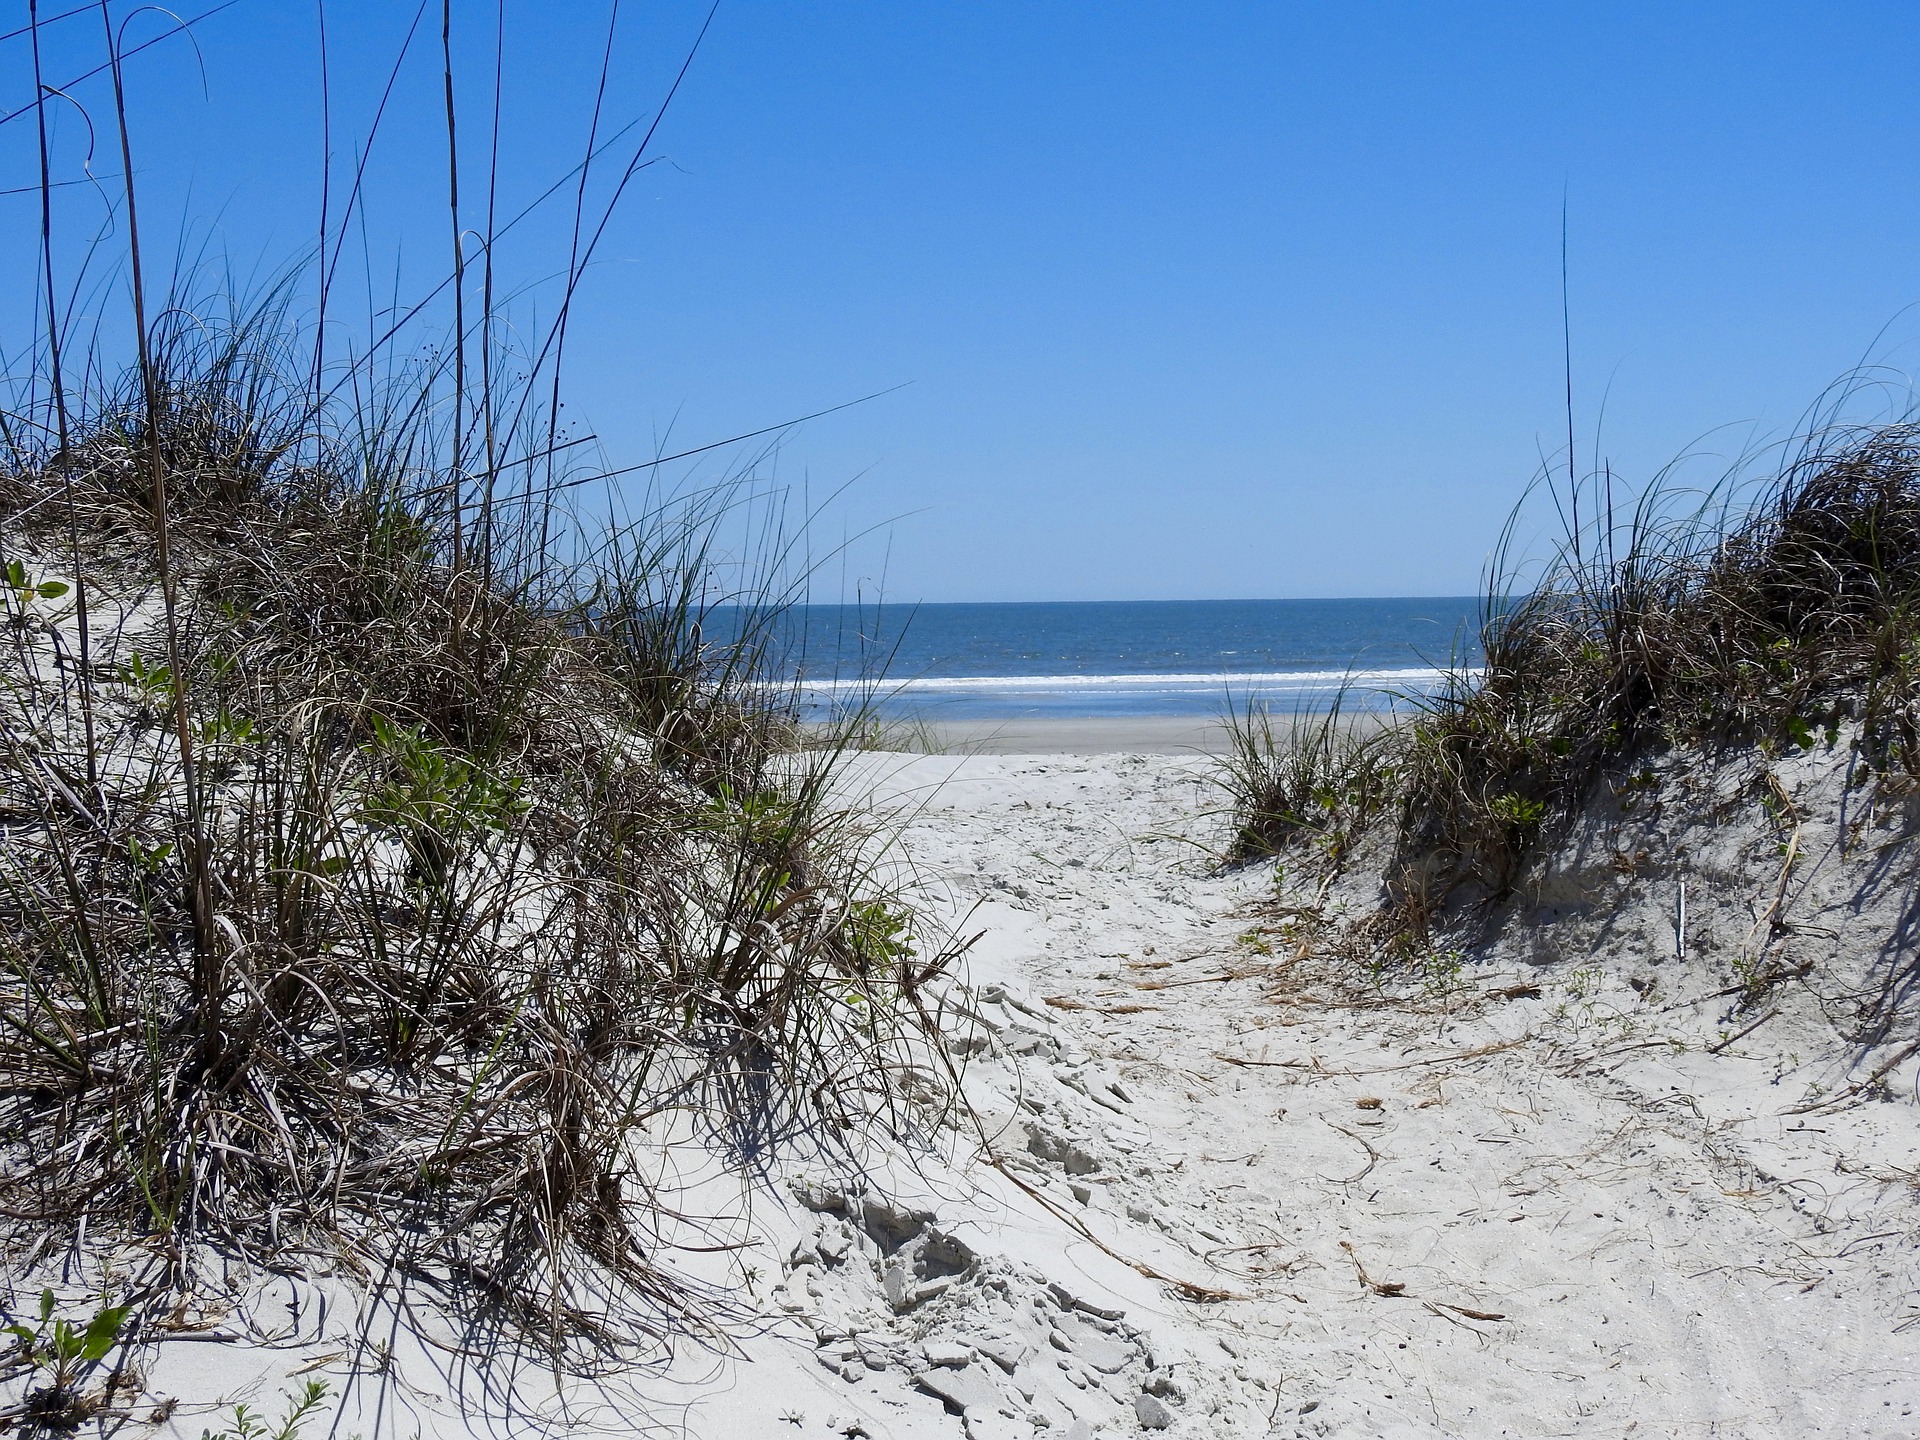 A North Carolina beach scene